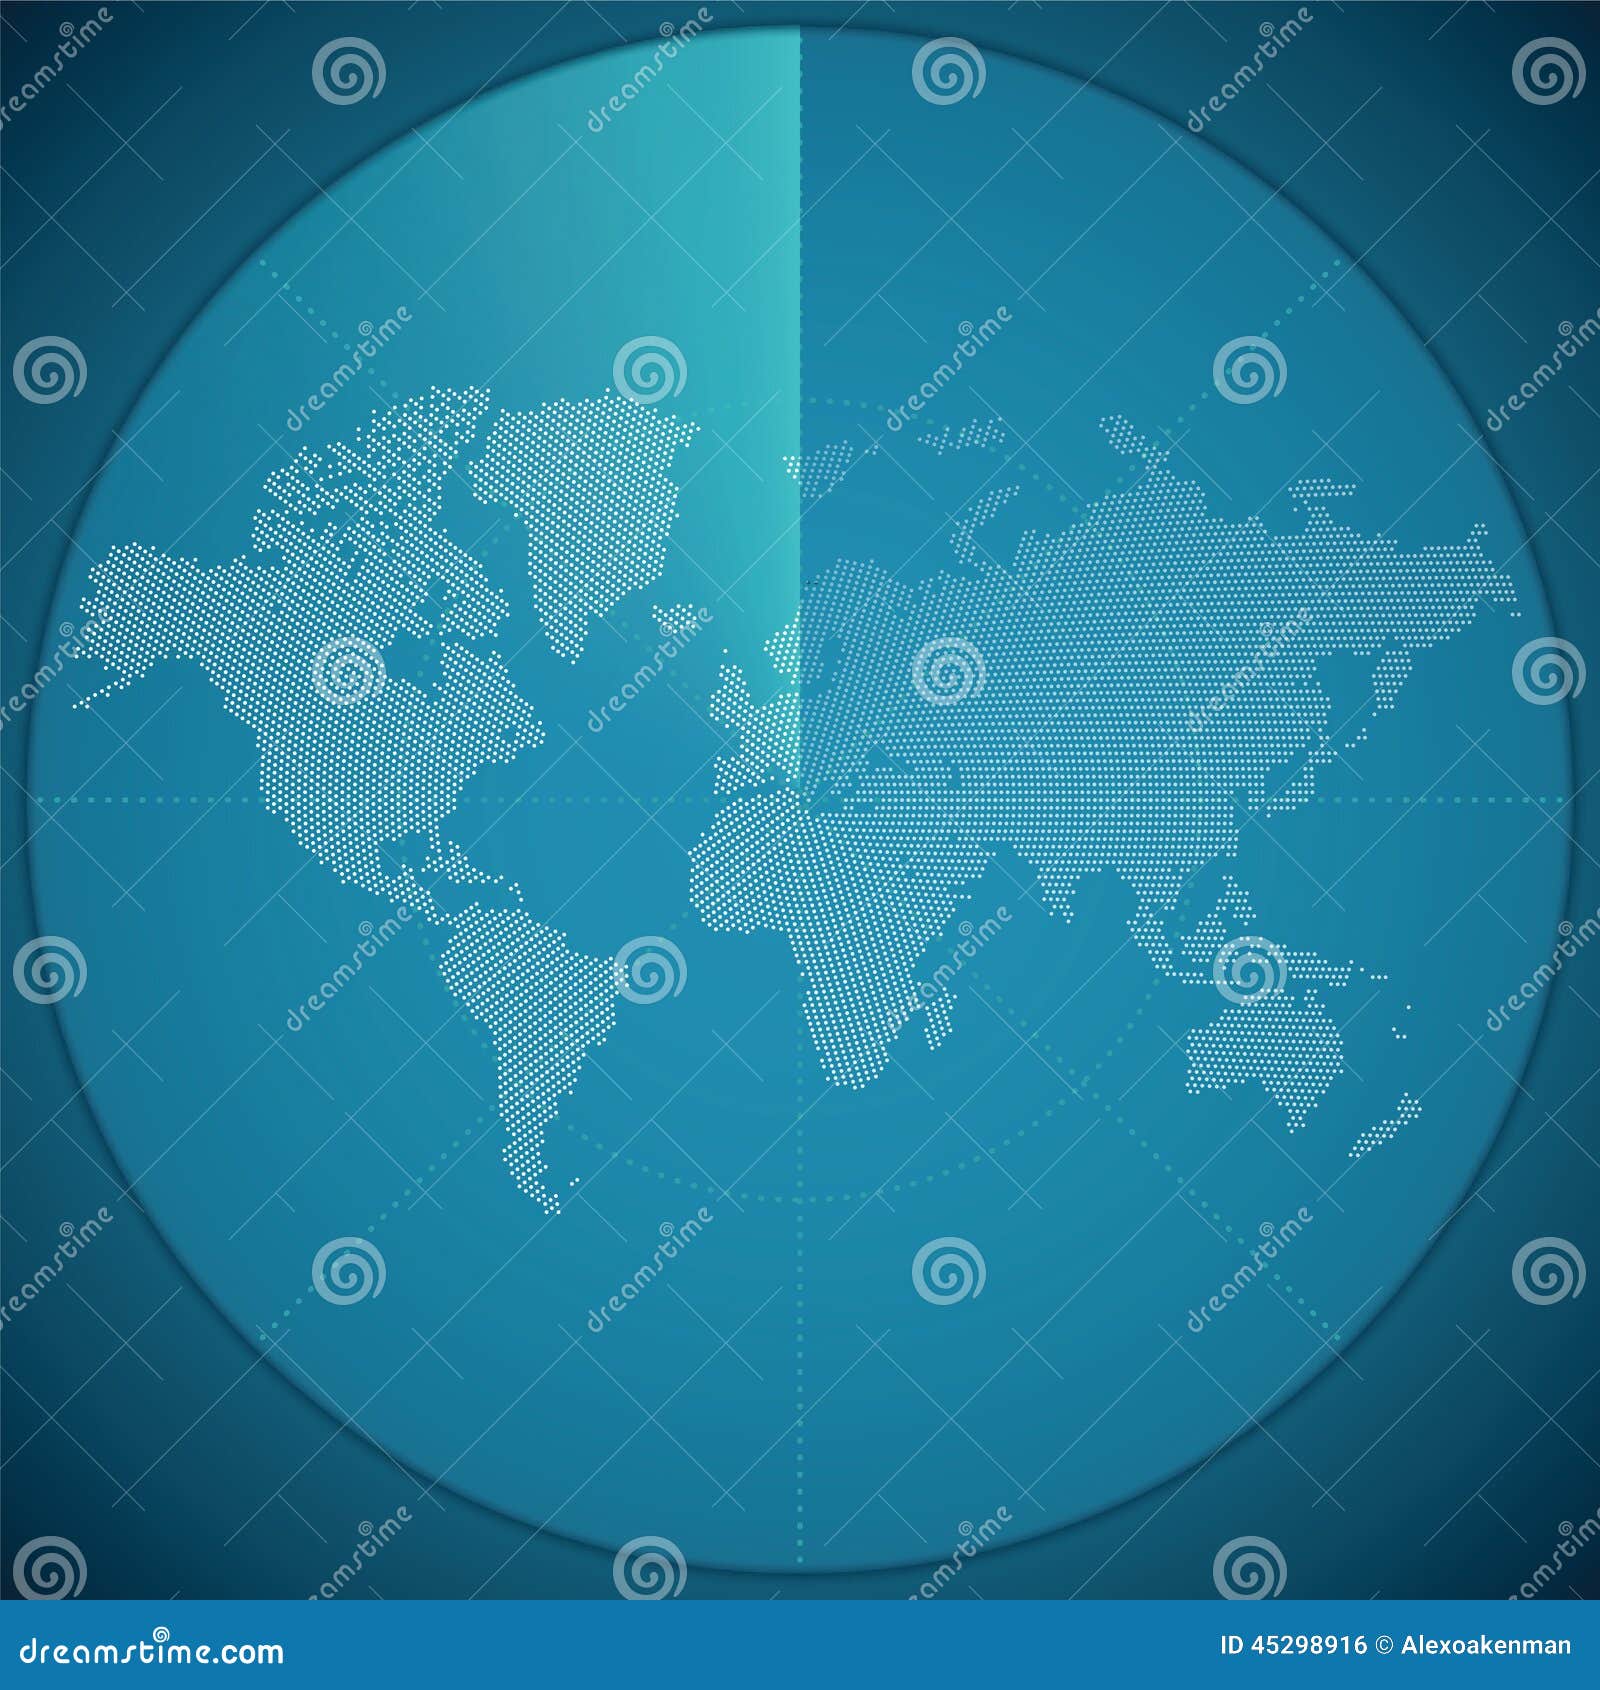   concept of world map on digital sonar display